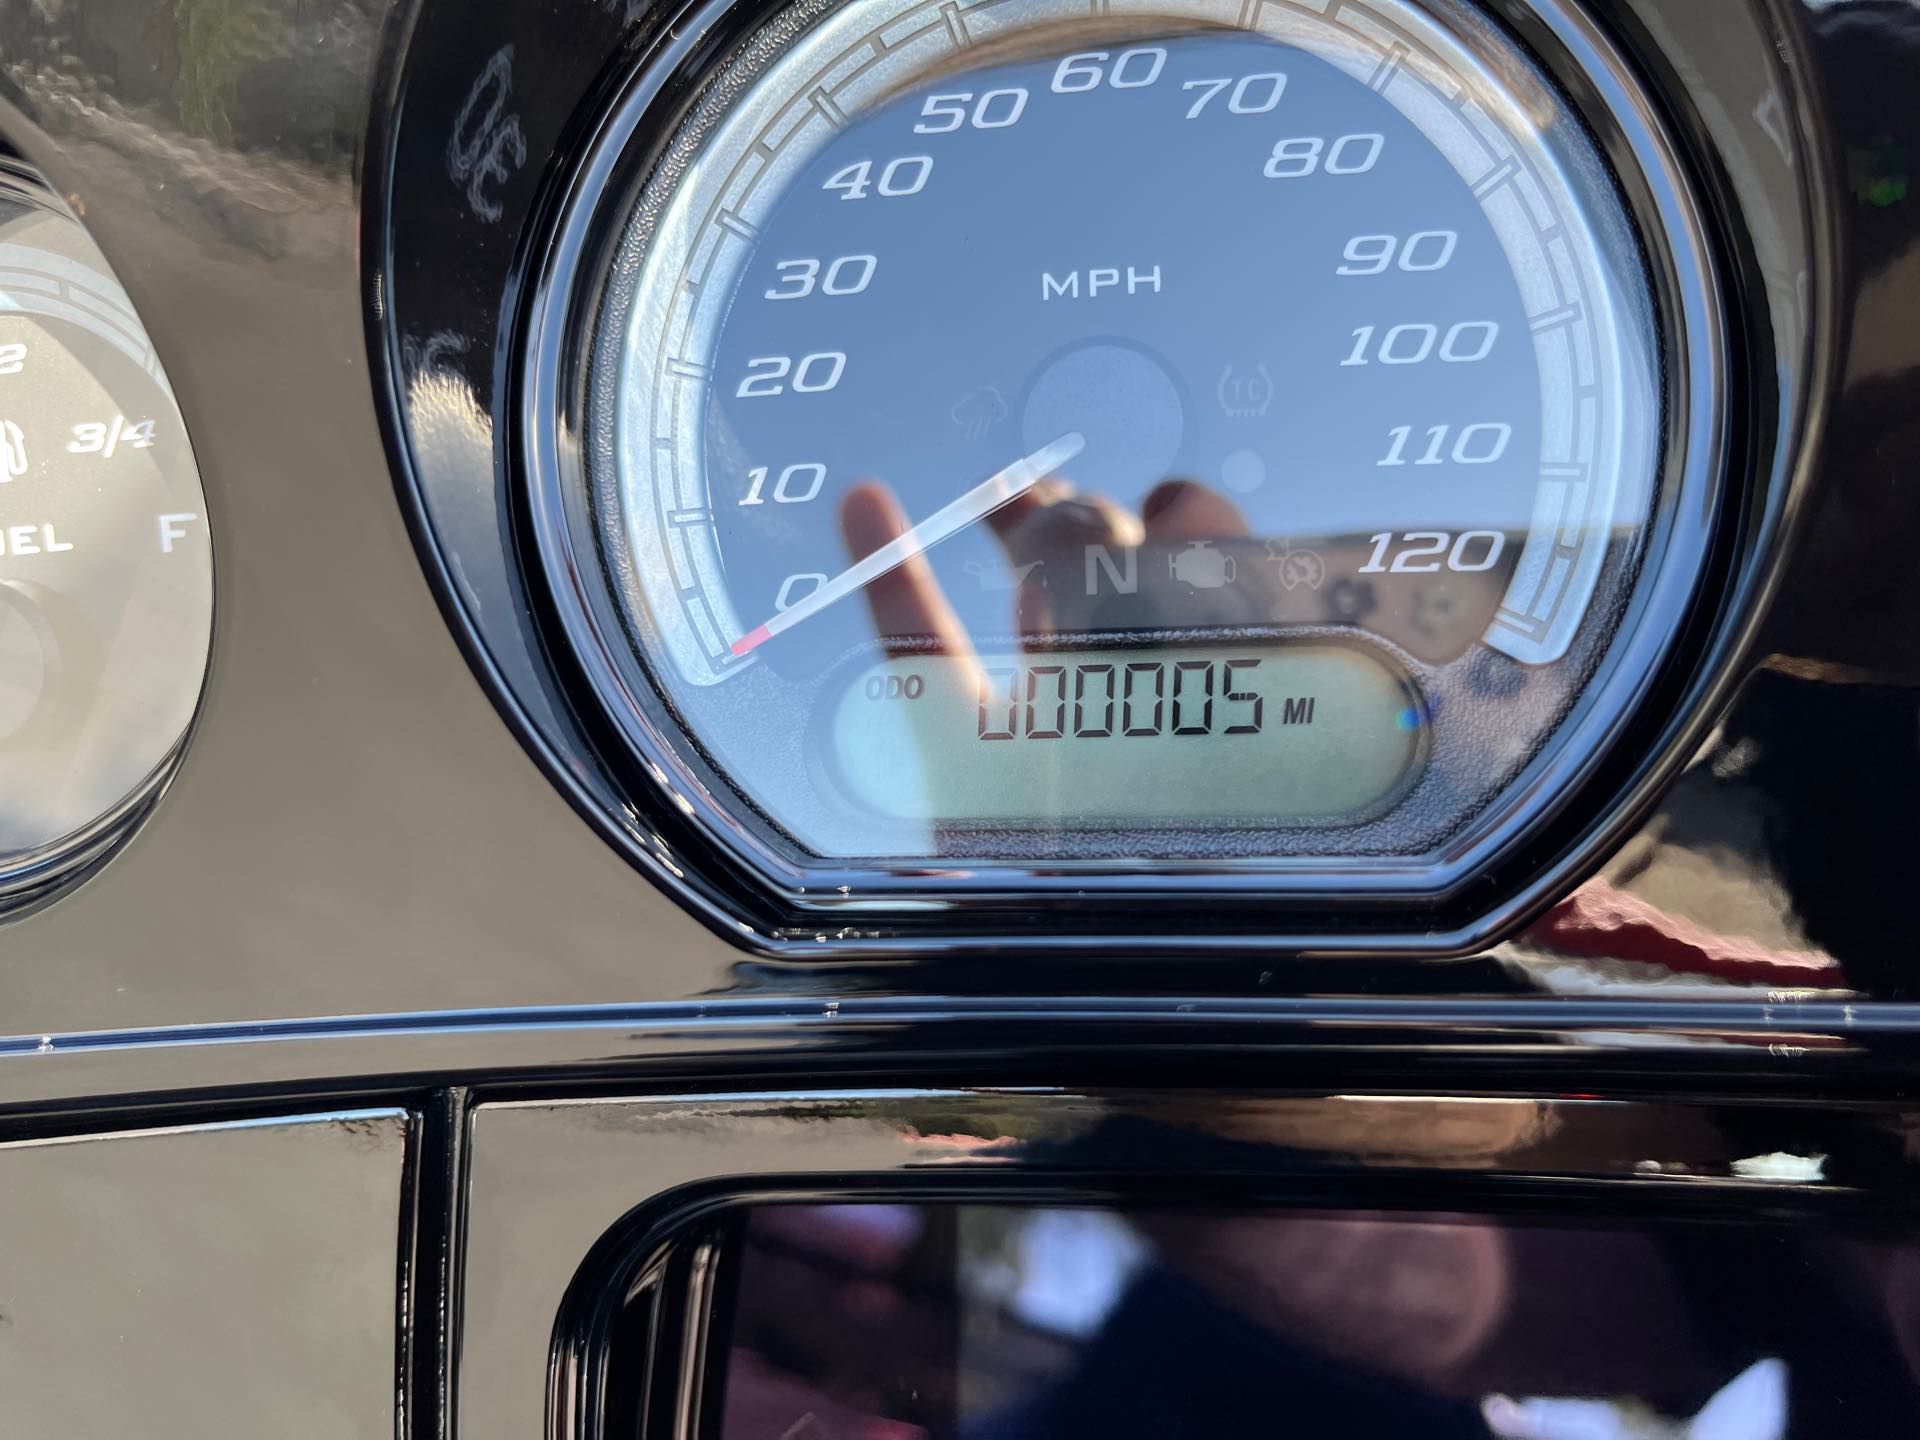 2023 Harley-Davidson Electra Glide Ultra Limited at Buddy Stubbs Arizona Harley-Davidson